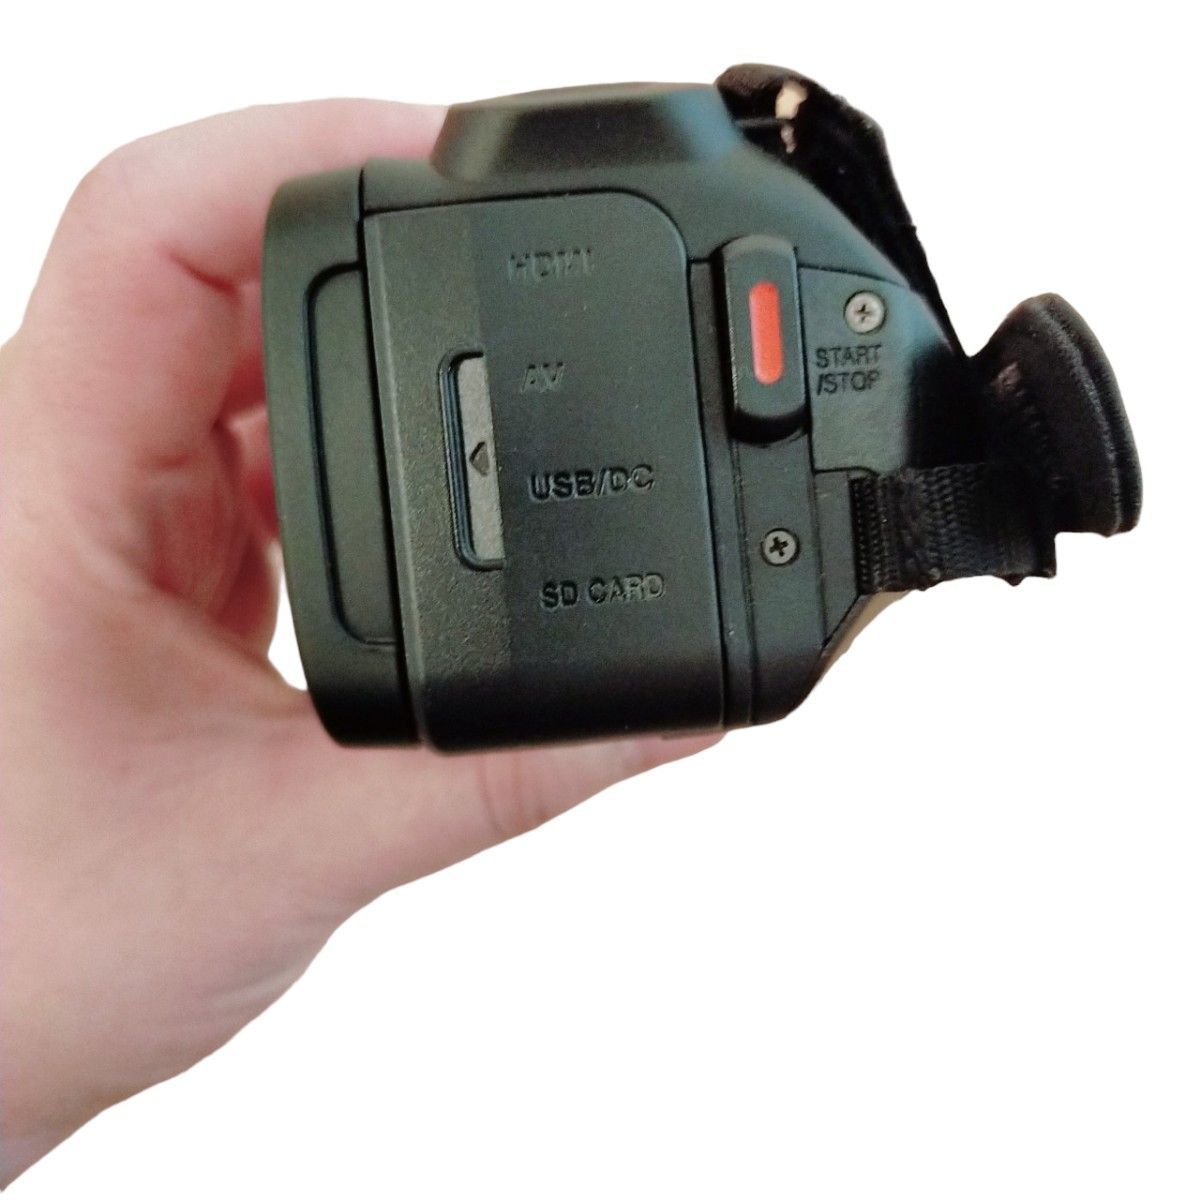 JVC　KENWOOD GZ-RX670-B　防水 防塵　 ビデオカメラ